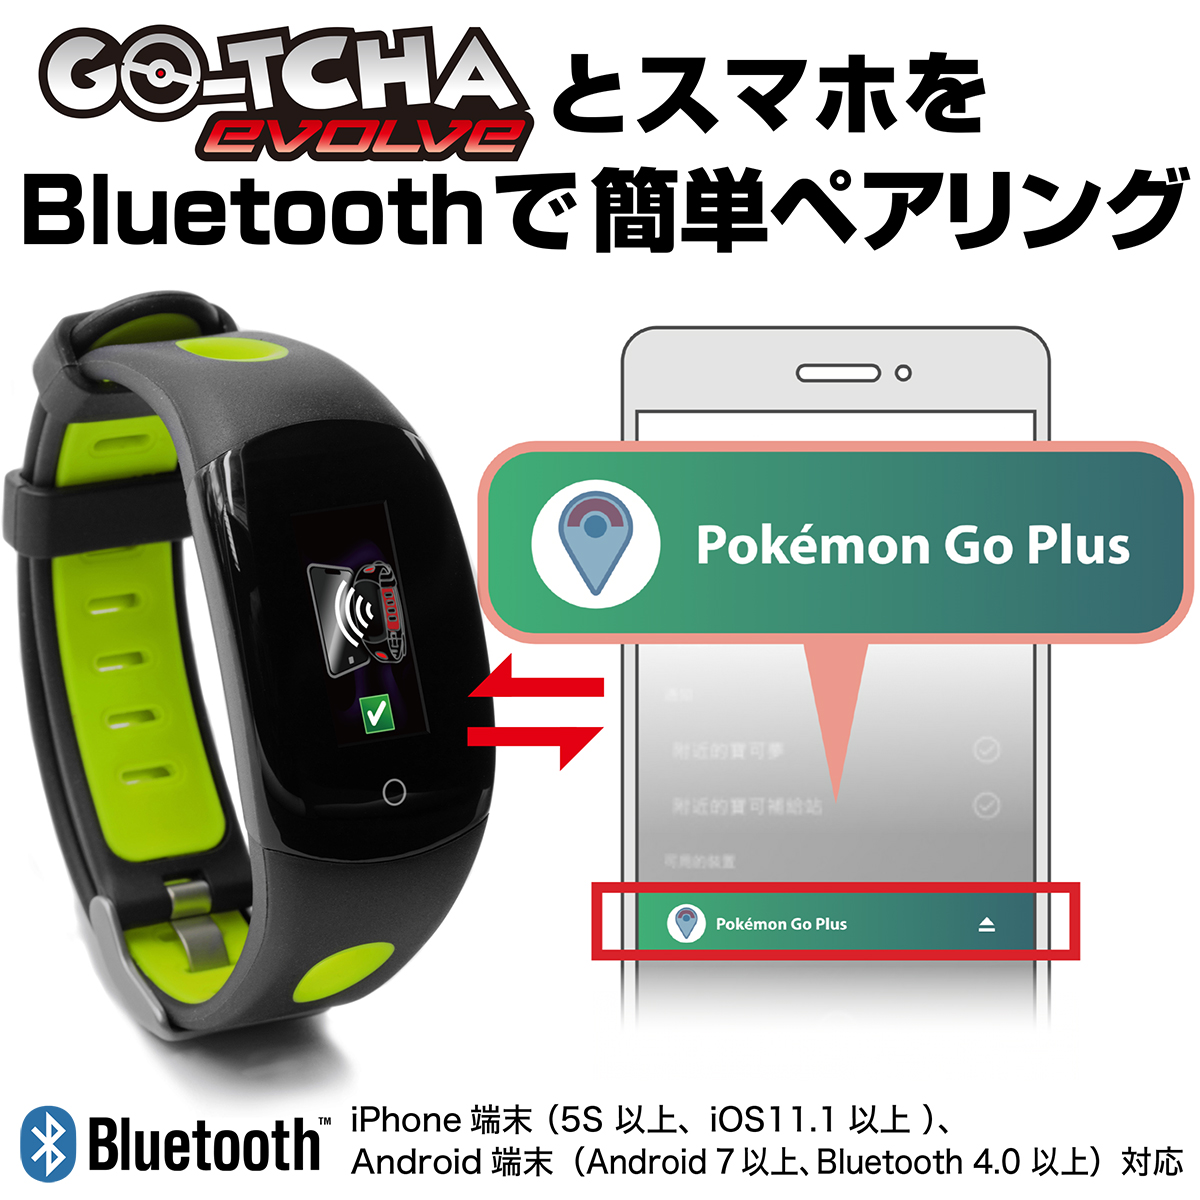  Pokemon GO pocket auto catch 2 pcs same time connection full automation Pocket auto catch GO-TCHA Generation Pokemon Go Plus 30 day with guarantee 